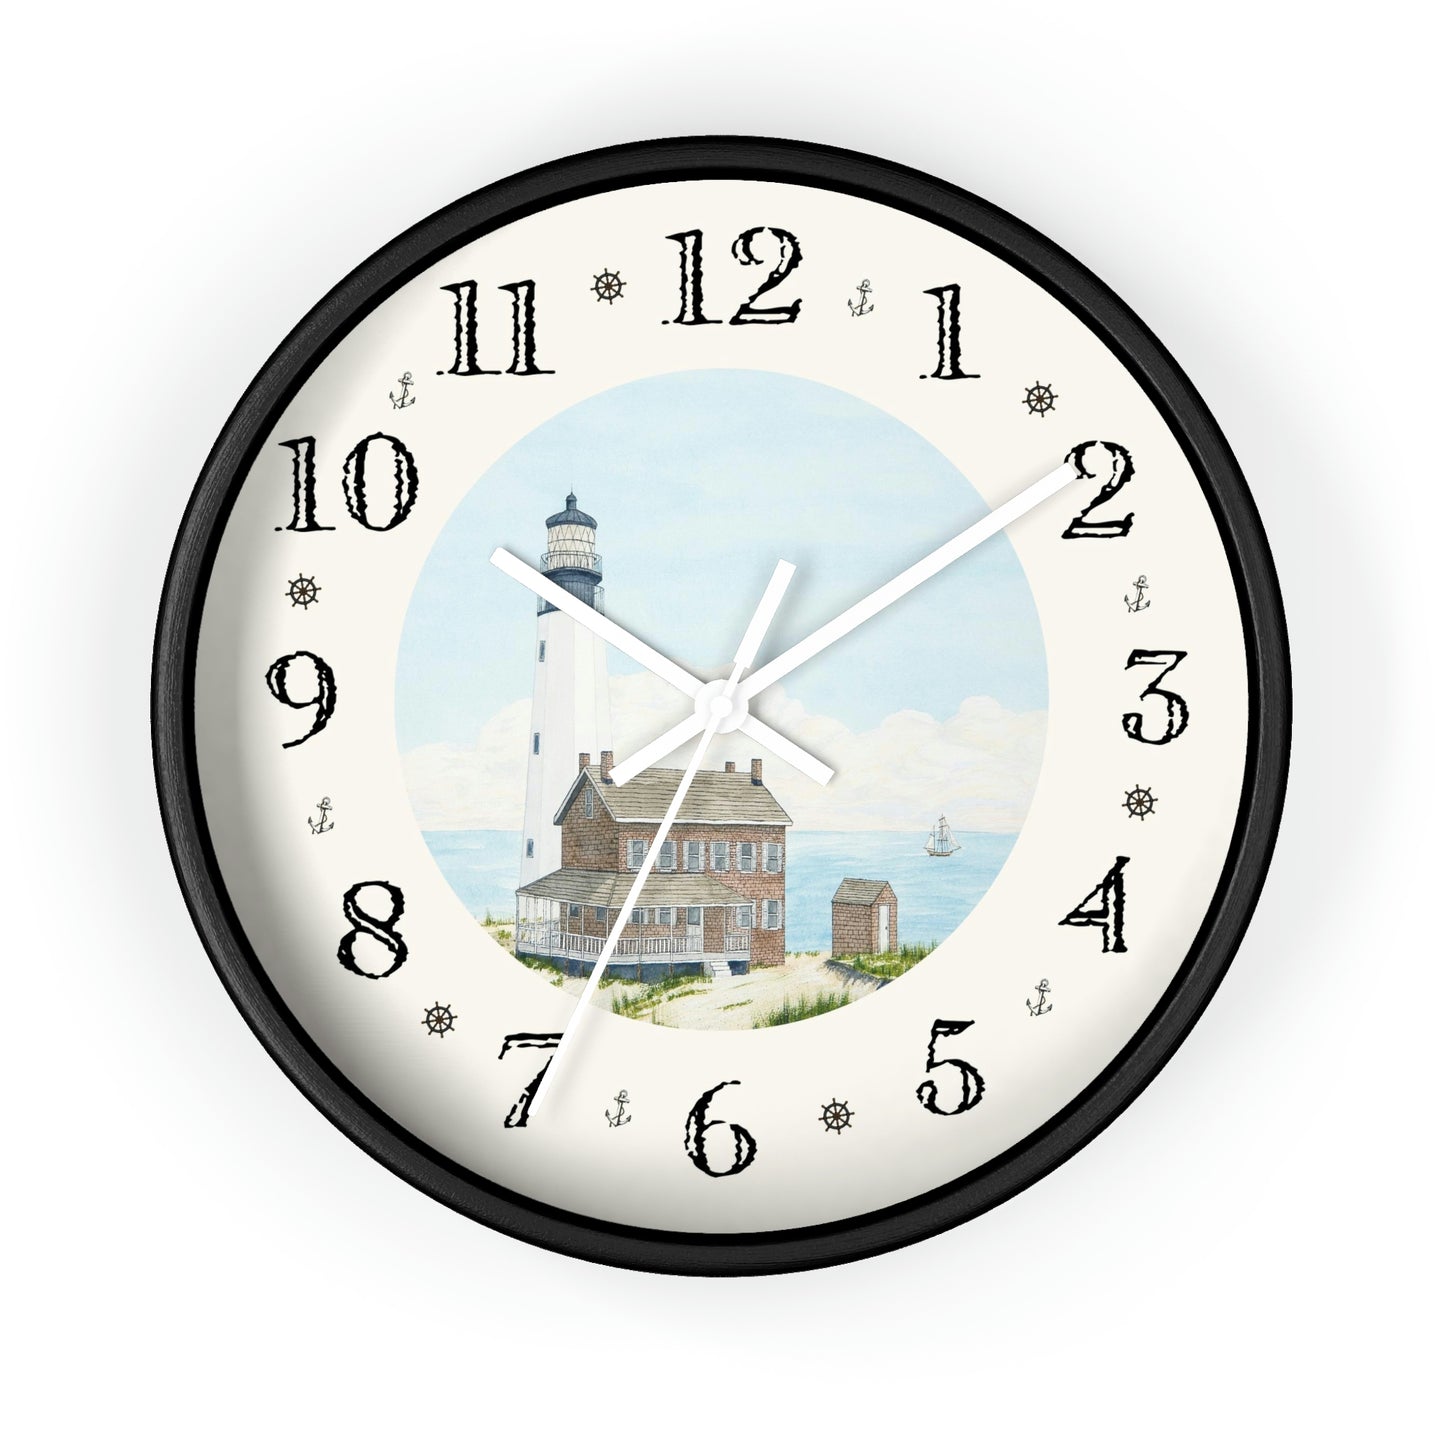 Spirit of Cape Henlopen Heirloom Designer Clock